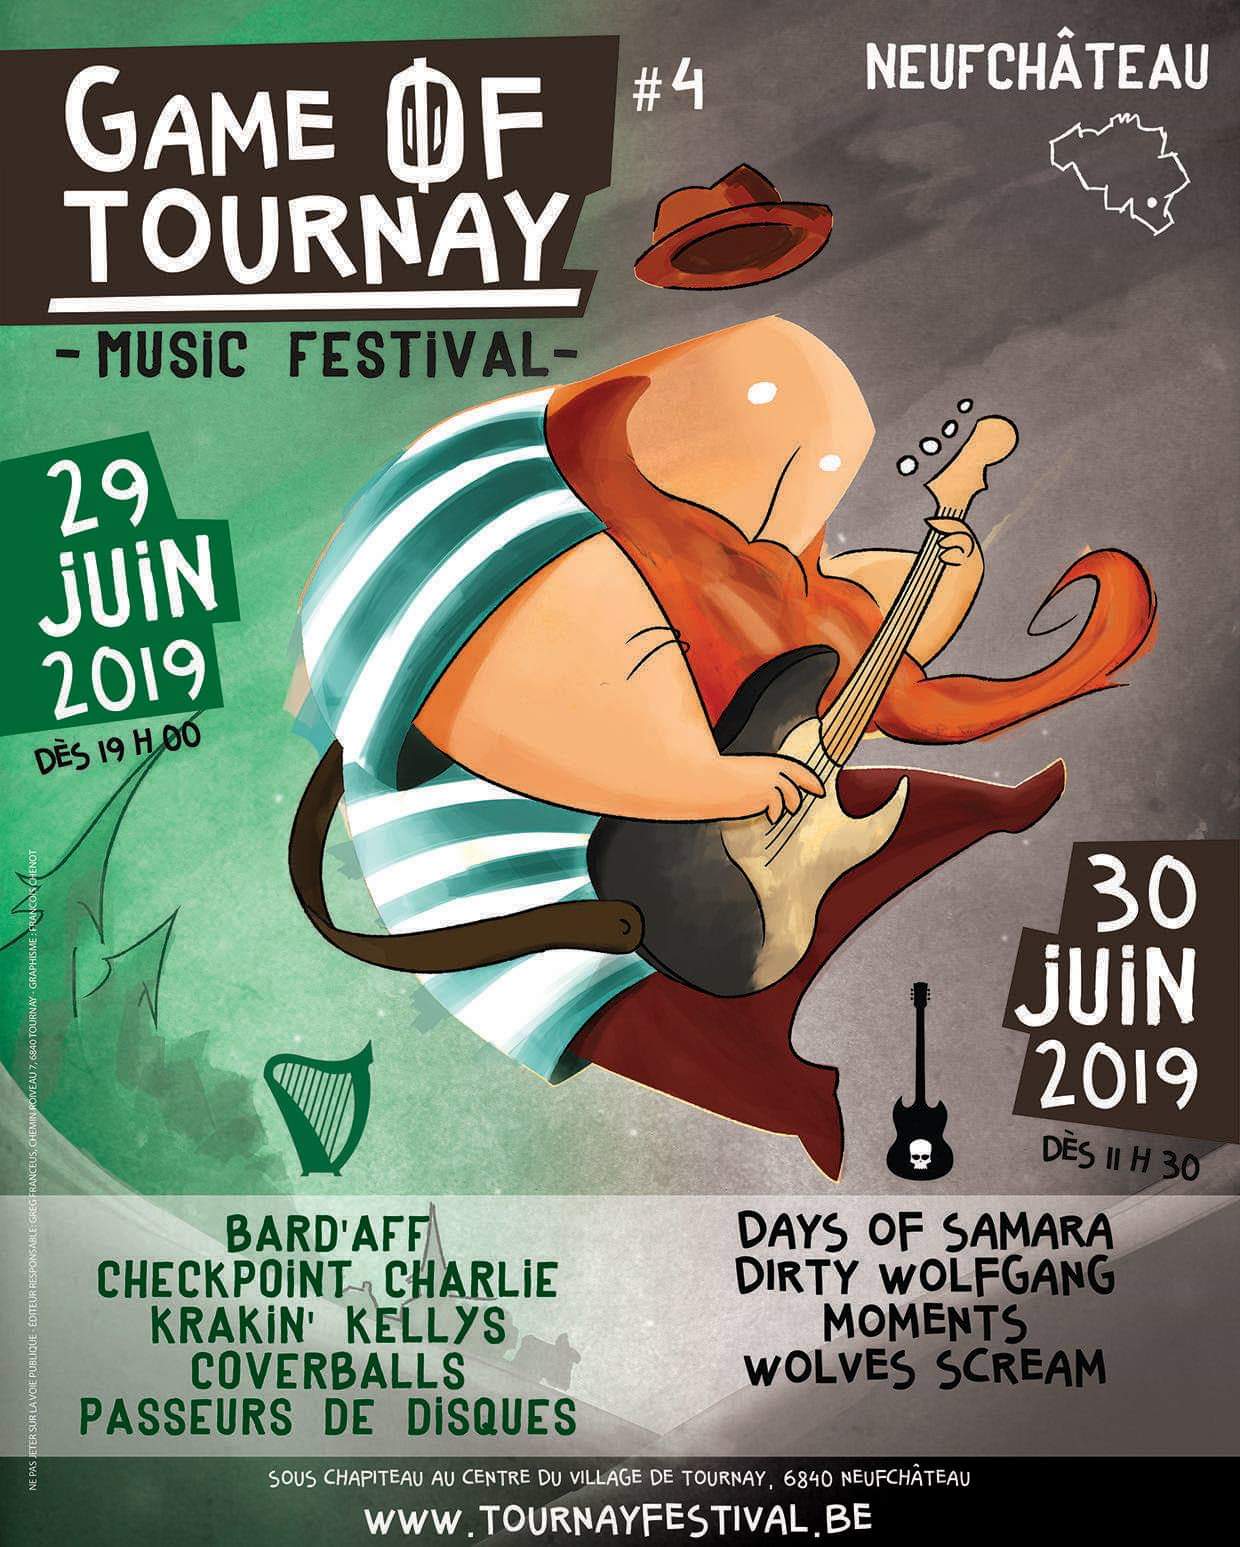 Dossier de Presse 2019 Festival musical Game Tournay Neufchâteau 3 Page 01 Image 0002